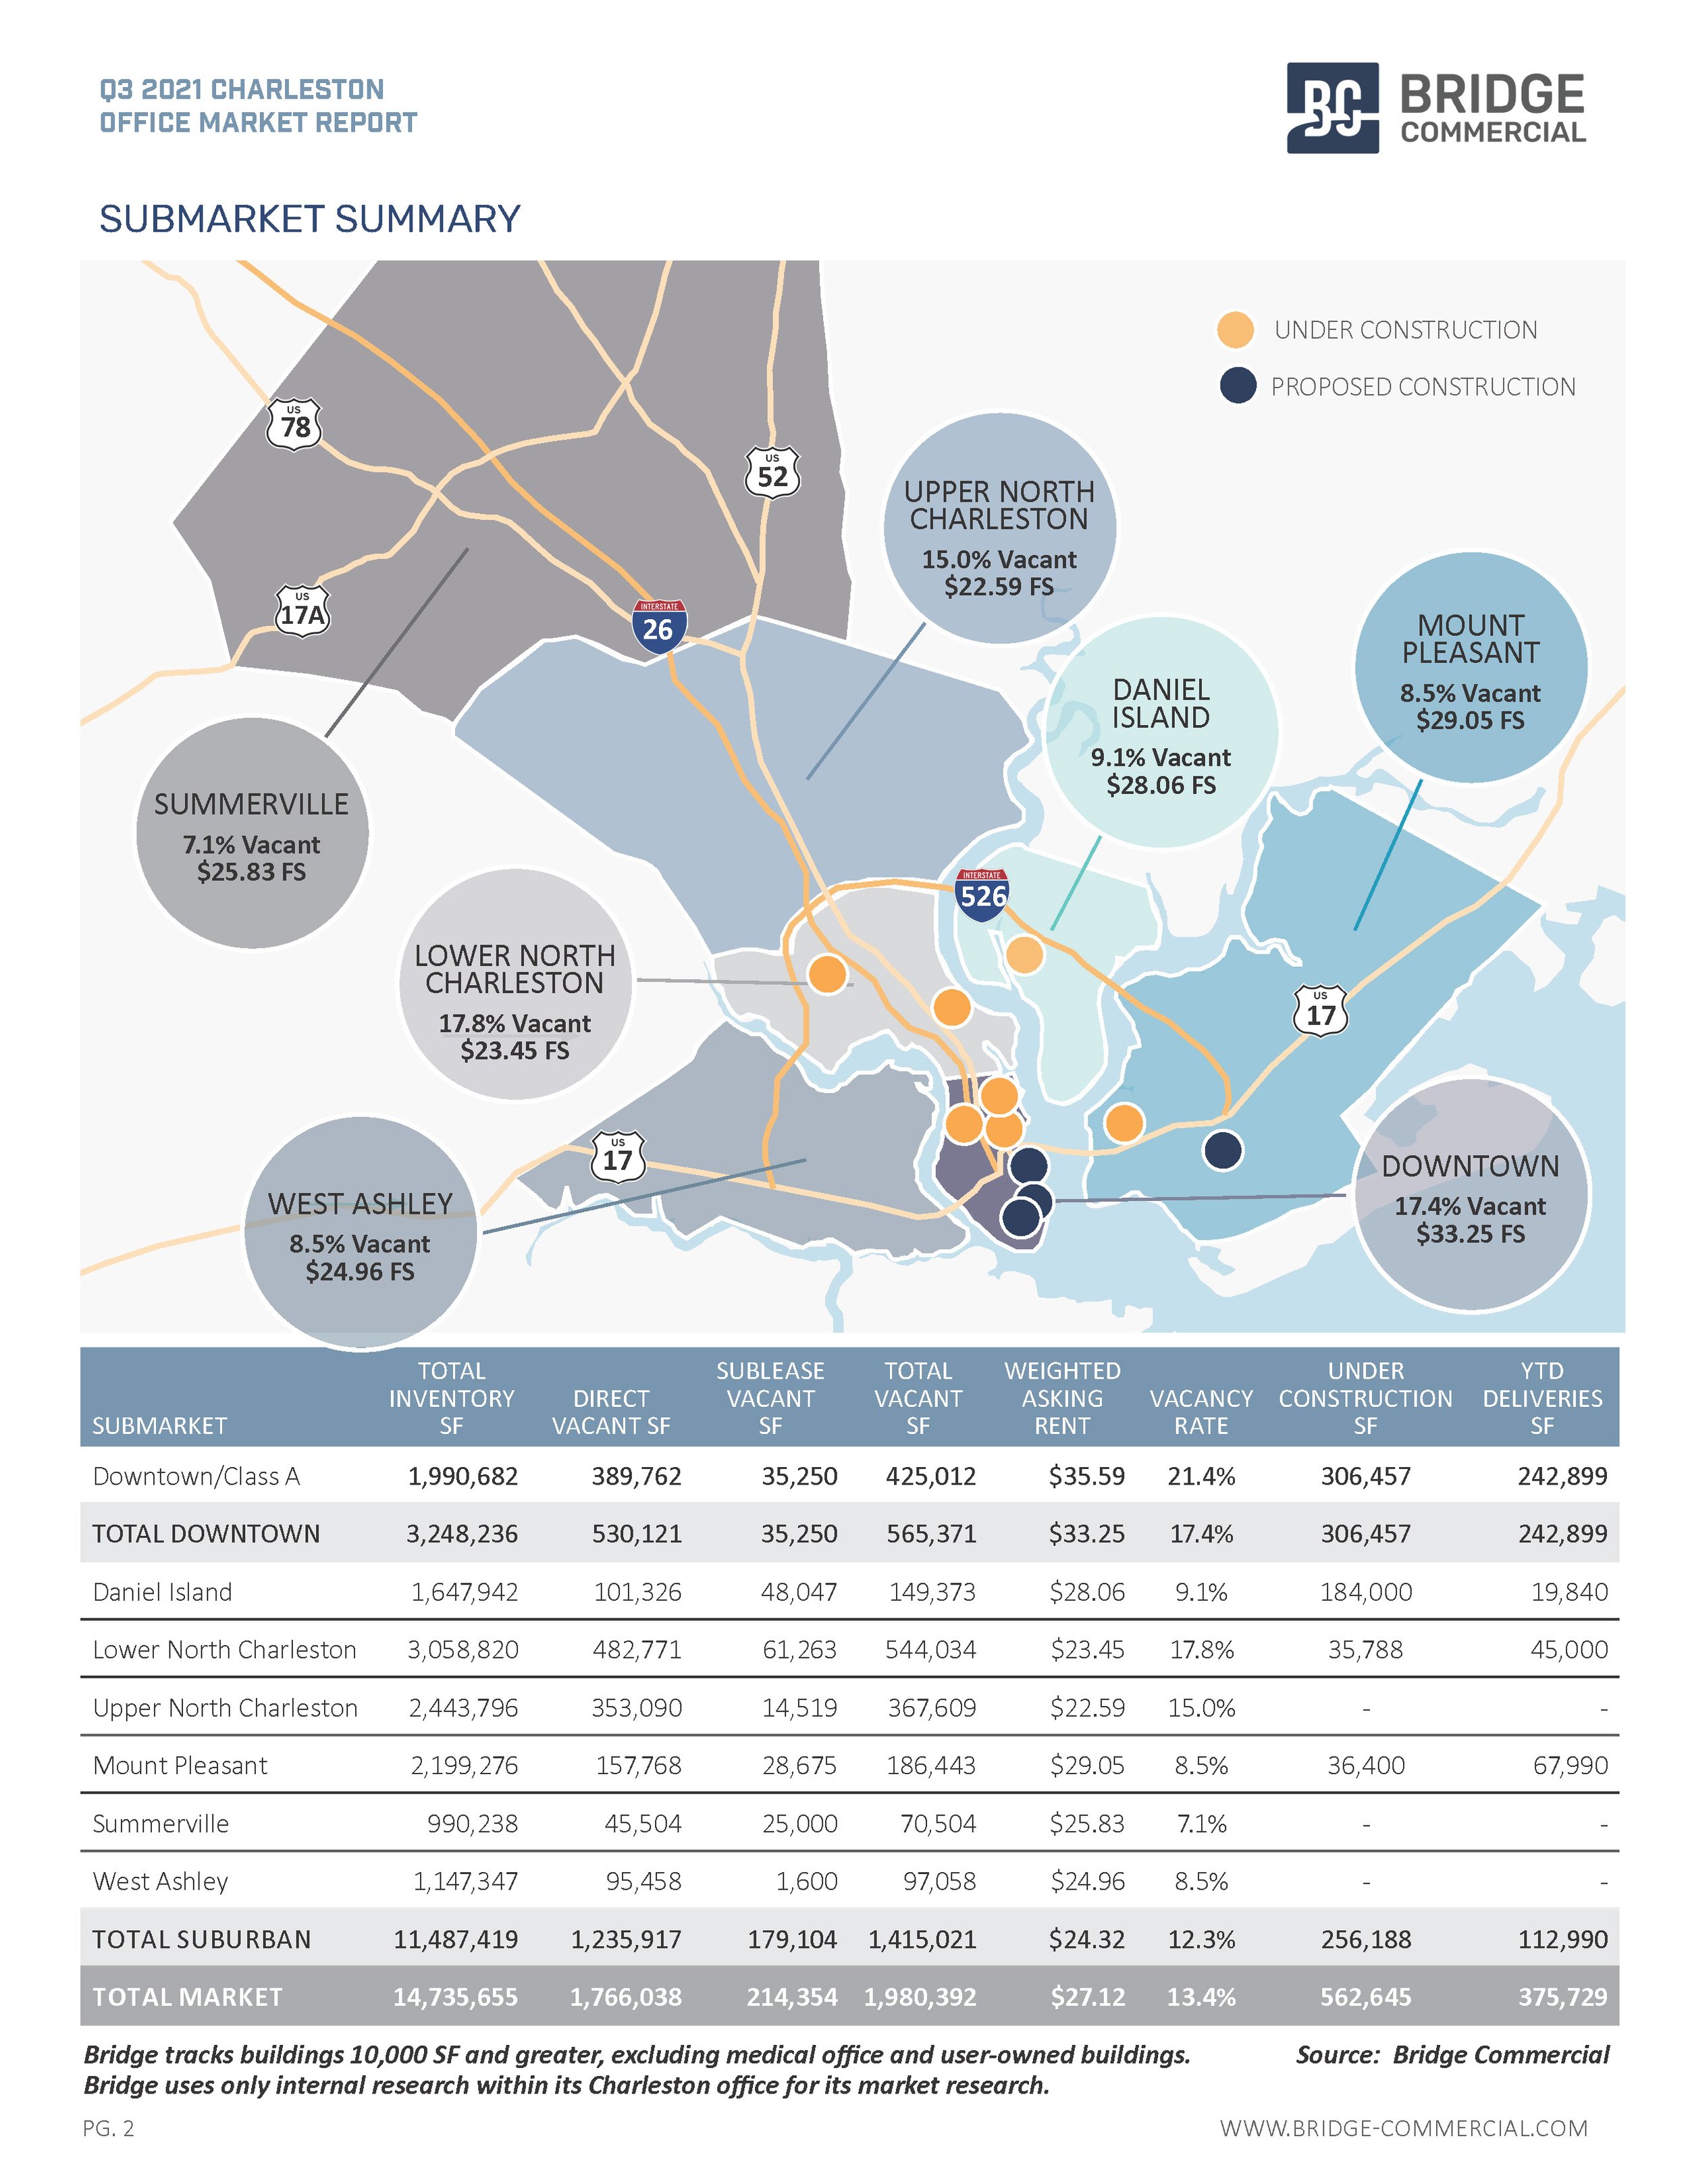 Q3 2021 Charleston Office Market Report_Bridge Commercial_Page_2.jpg